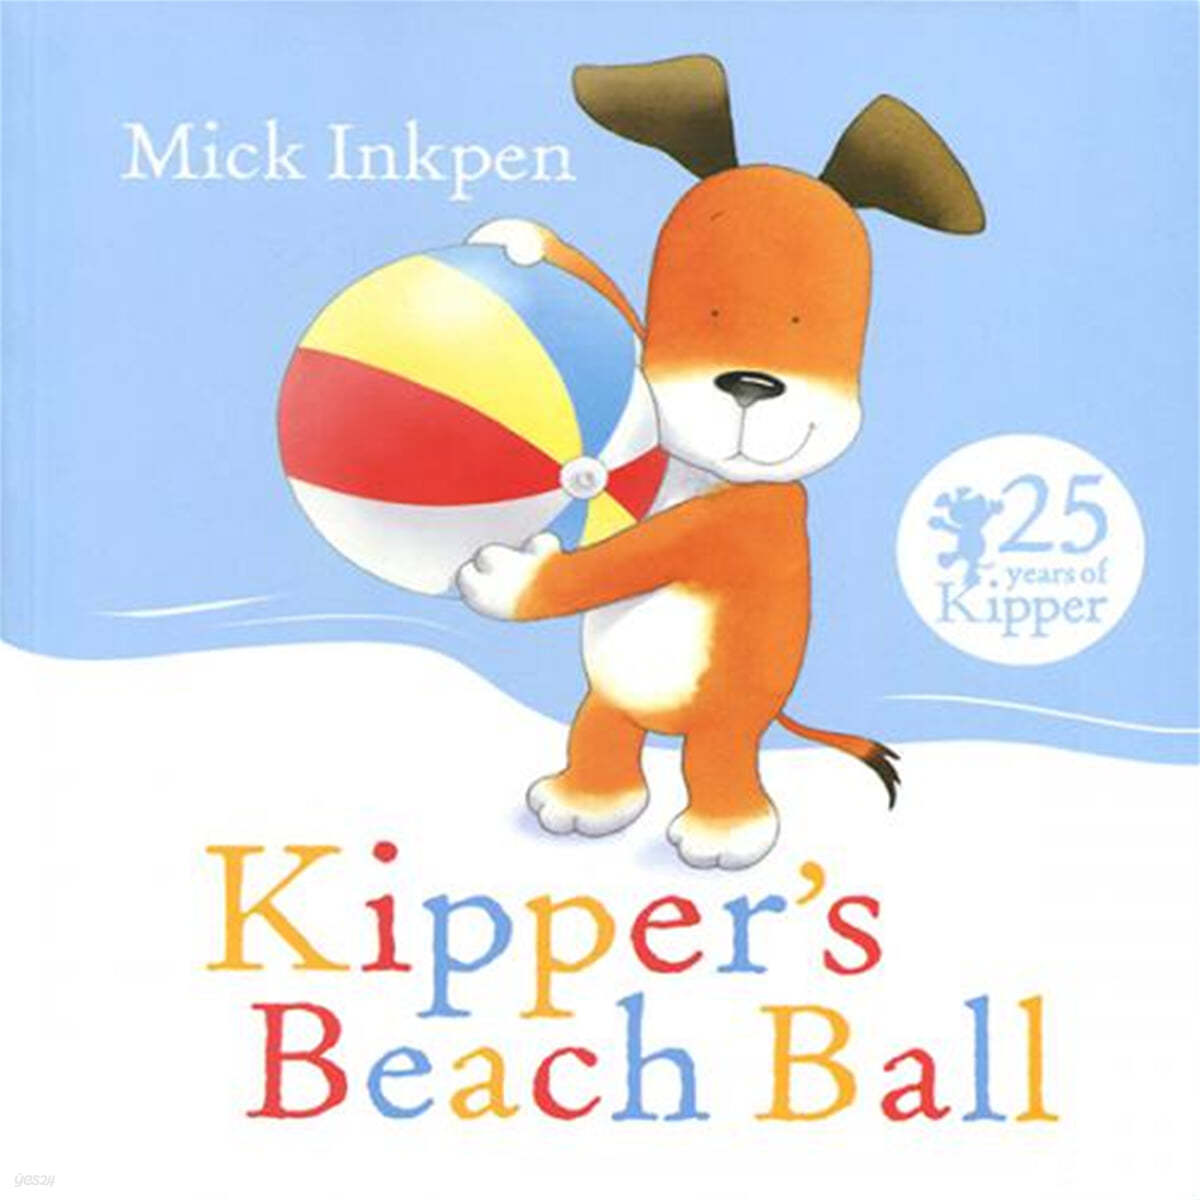 Kippers beach ball